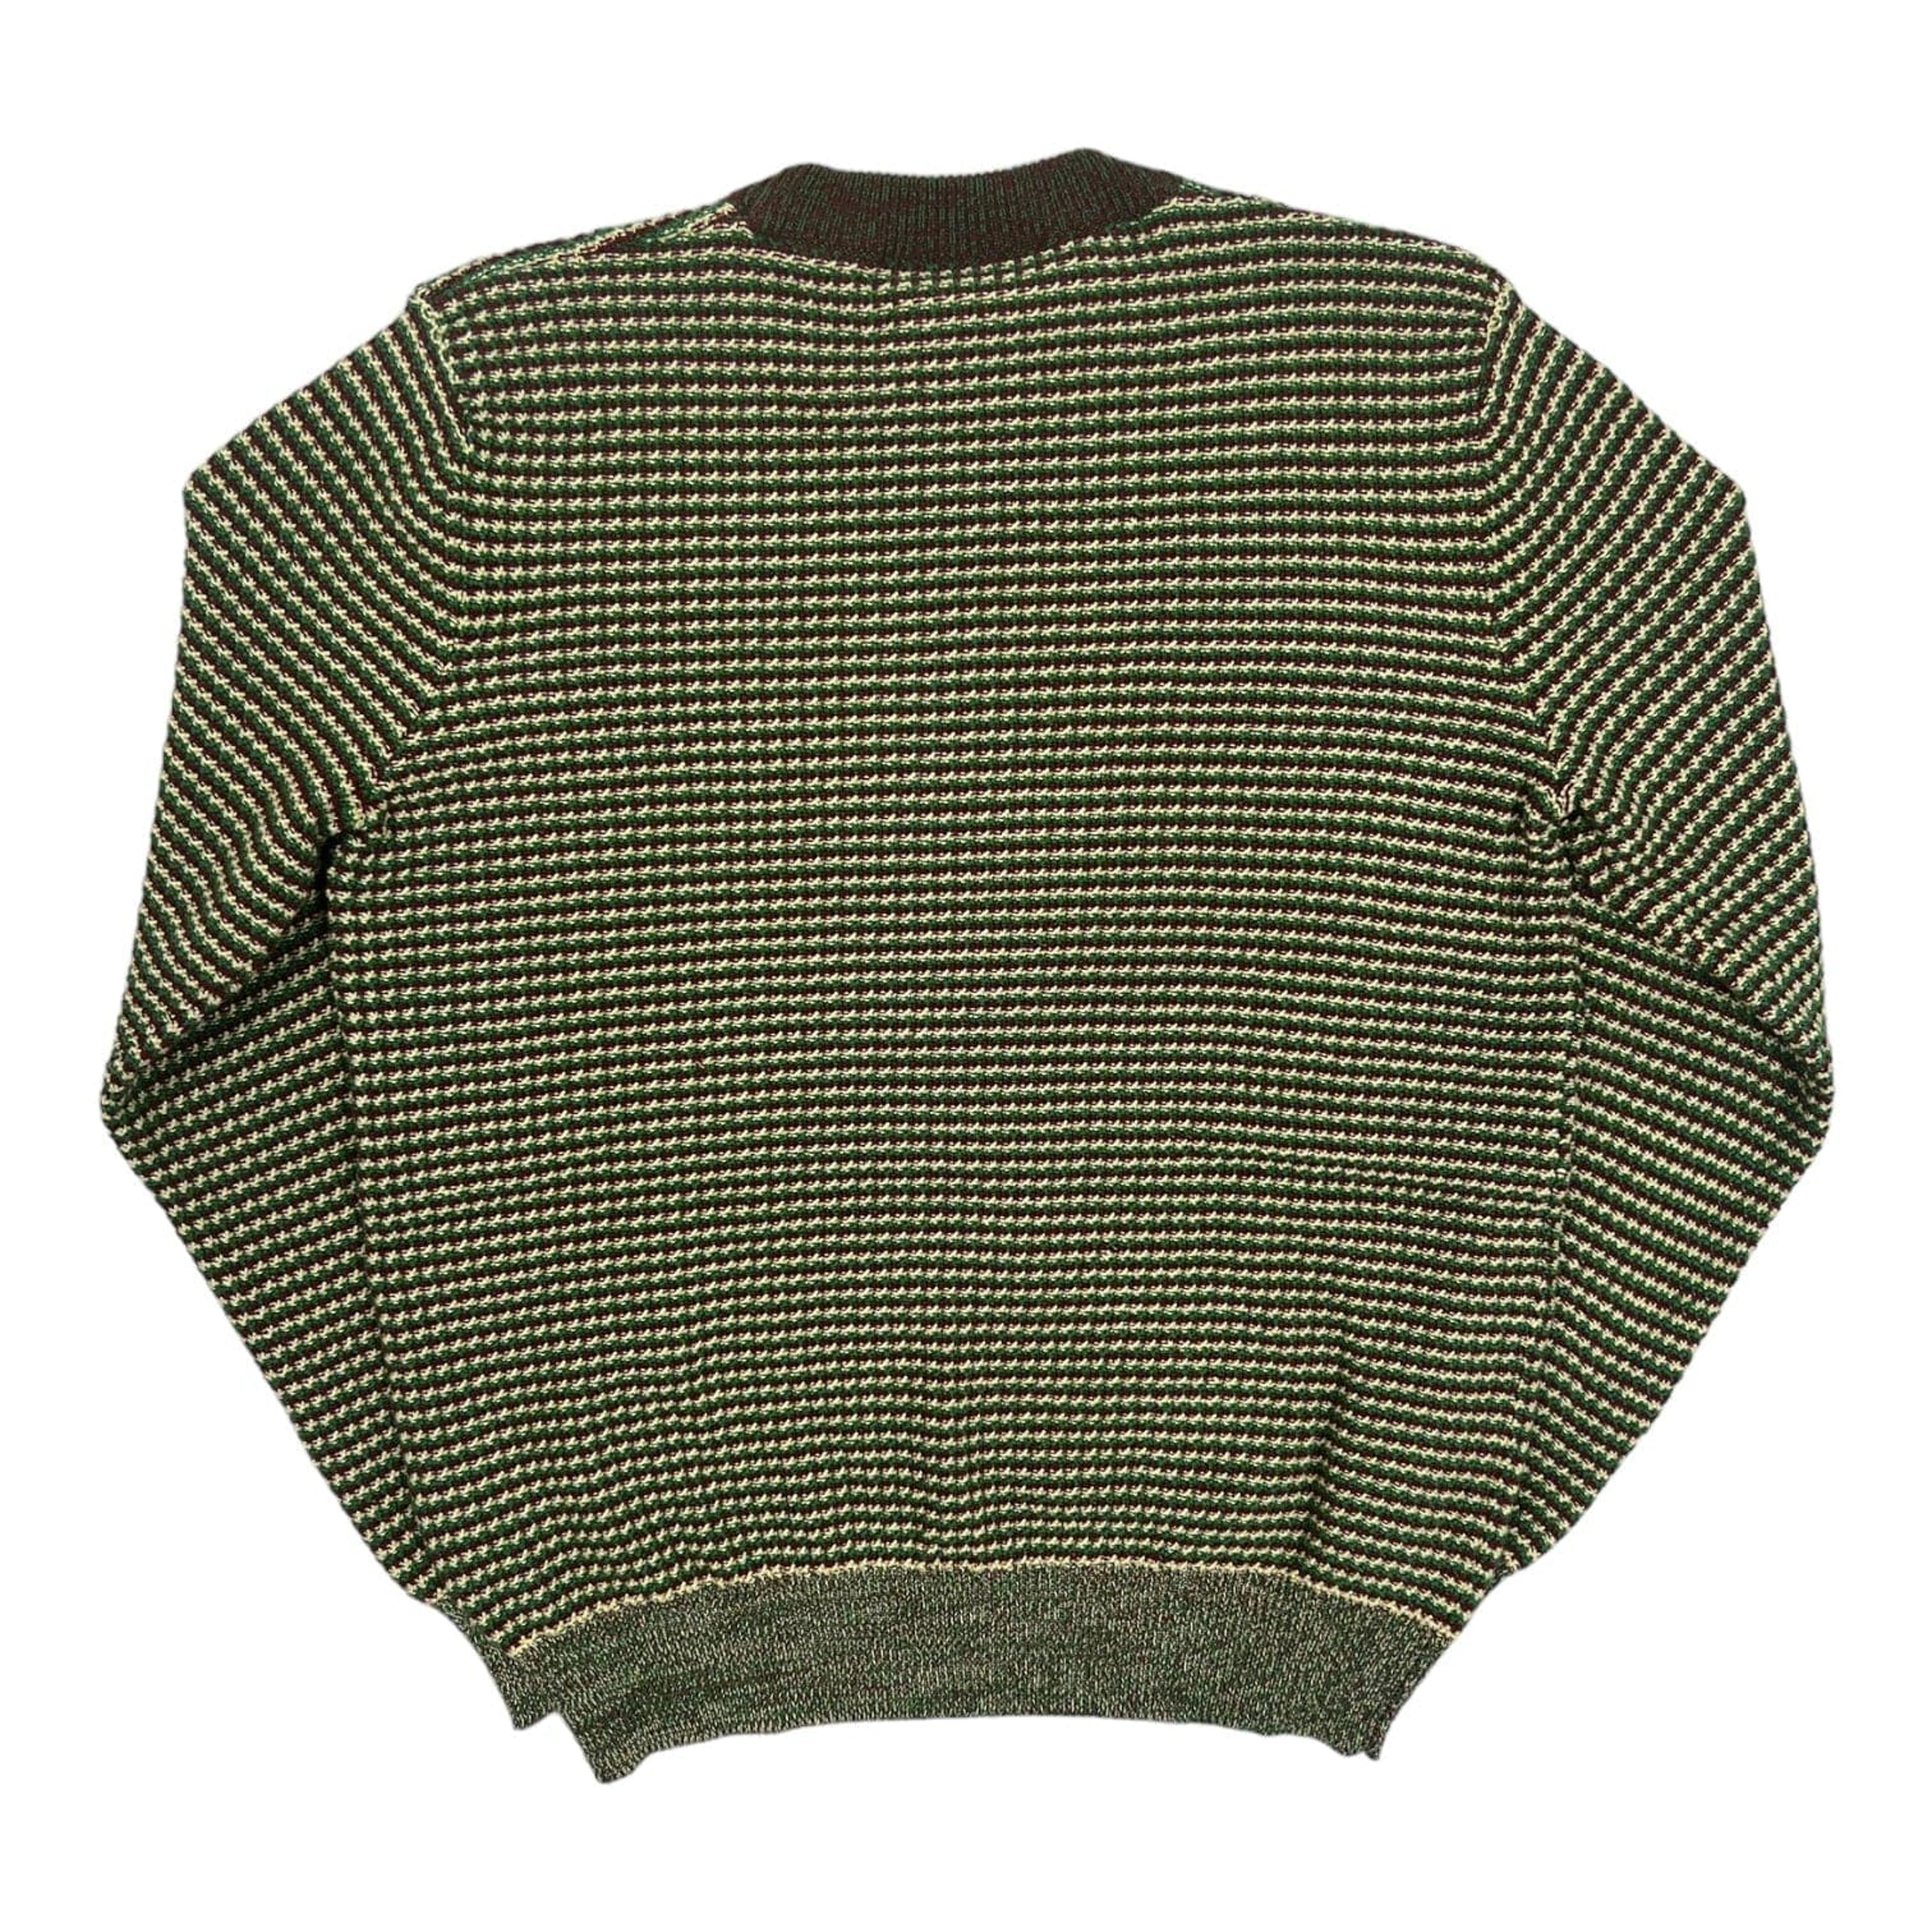 Alternate View 1 of Marni Knit Roundneck Crewneck Sweater Green